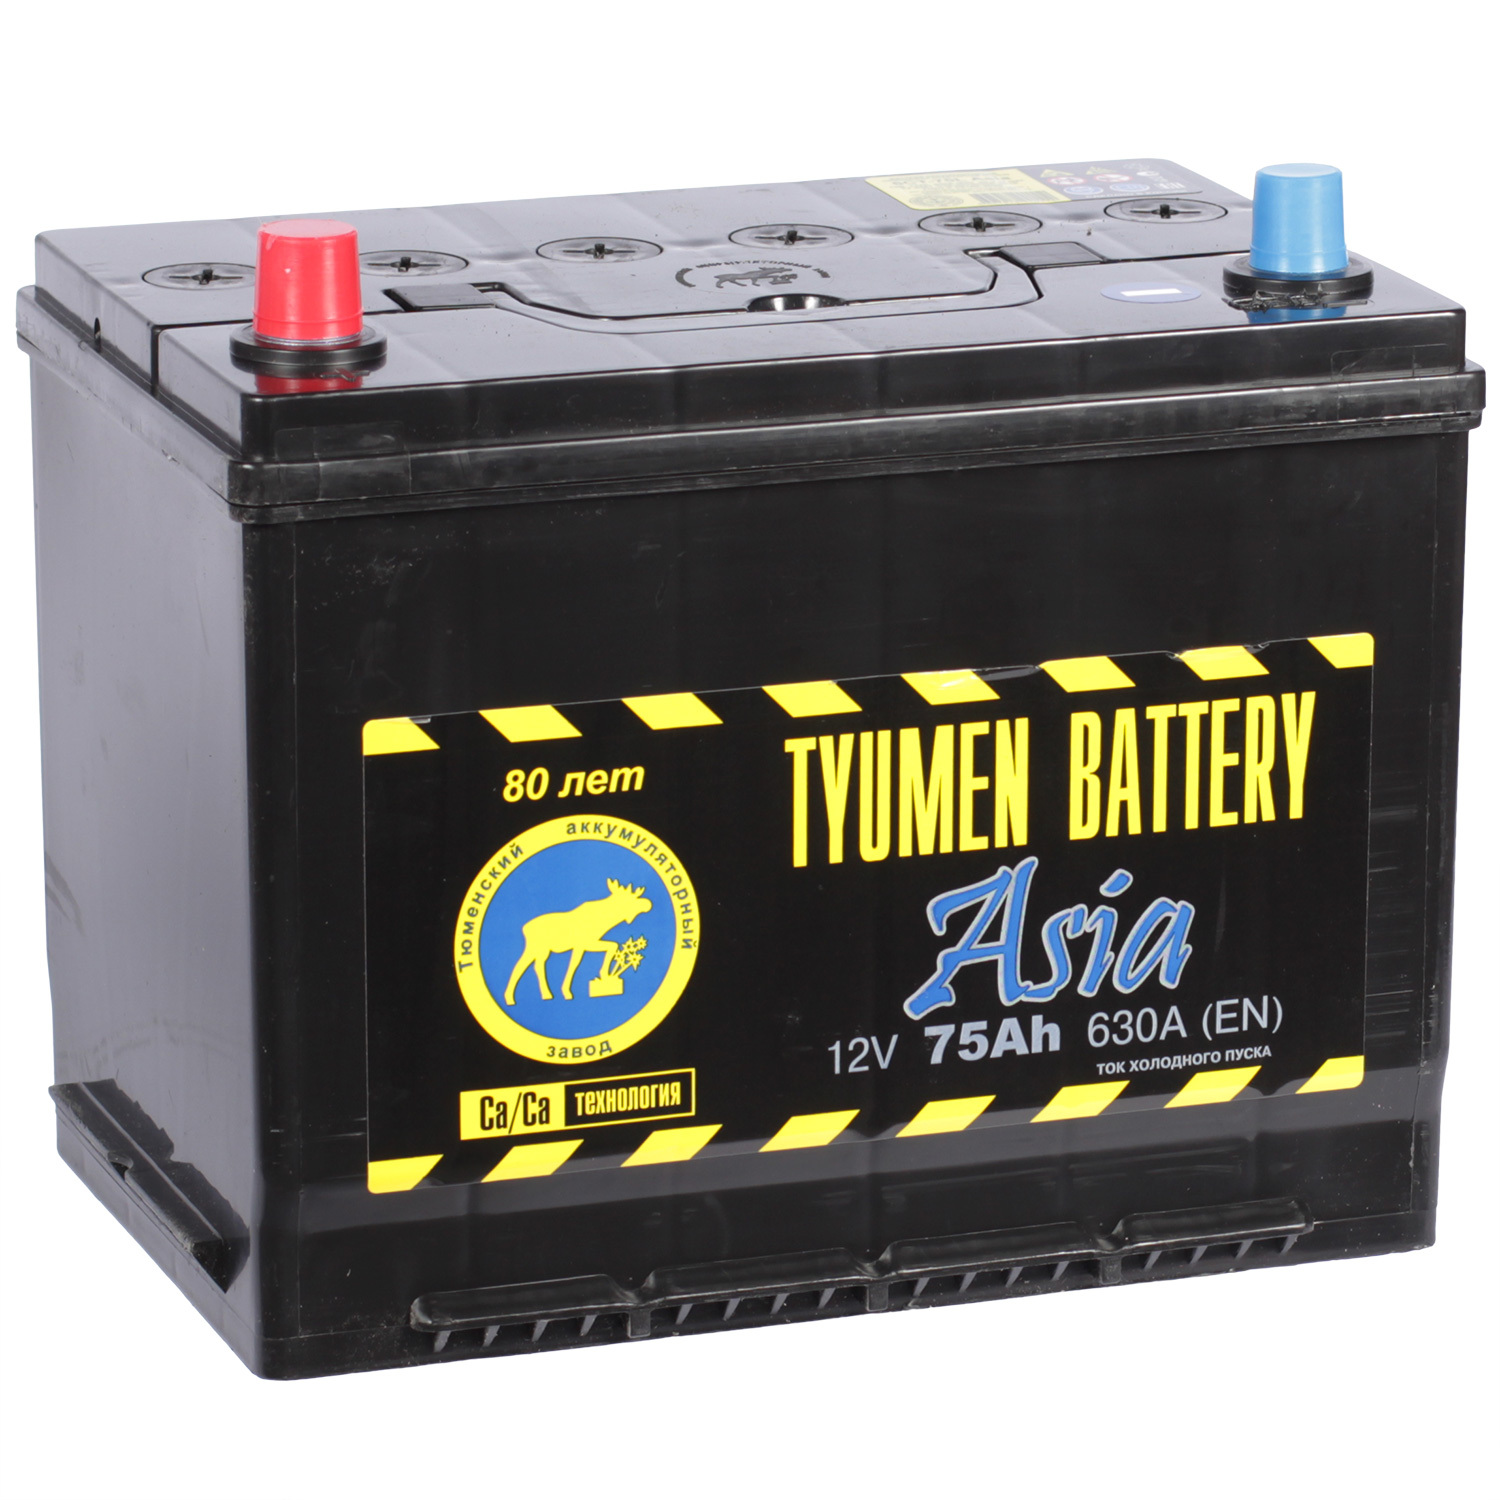 Tyumen Battery Автомобильный аккумулятор Tyumen Battery Asia 75 Ач прямая полярность D26R tyumen battery автомобильный аккумулятор tyumen battery 95 ач прямая полярность d31r